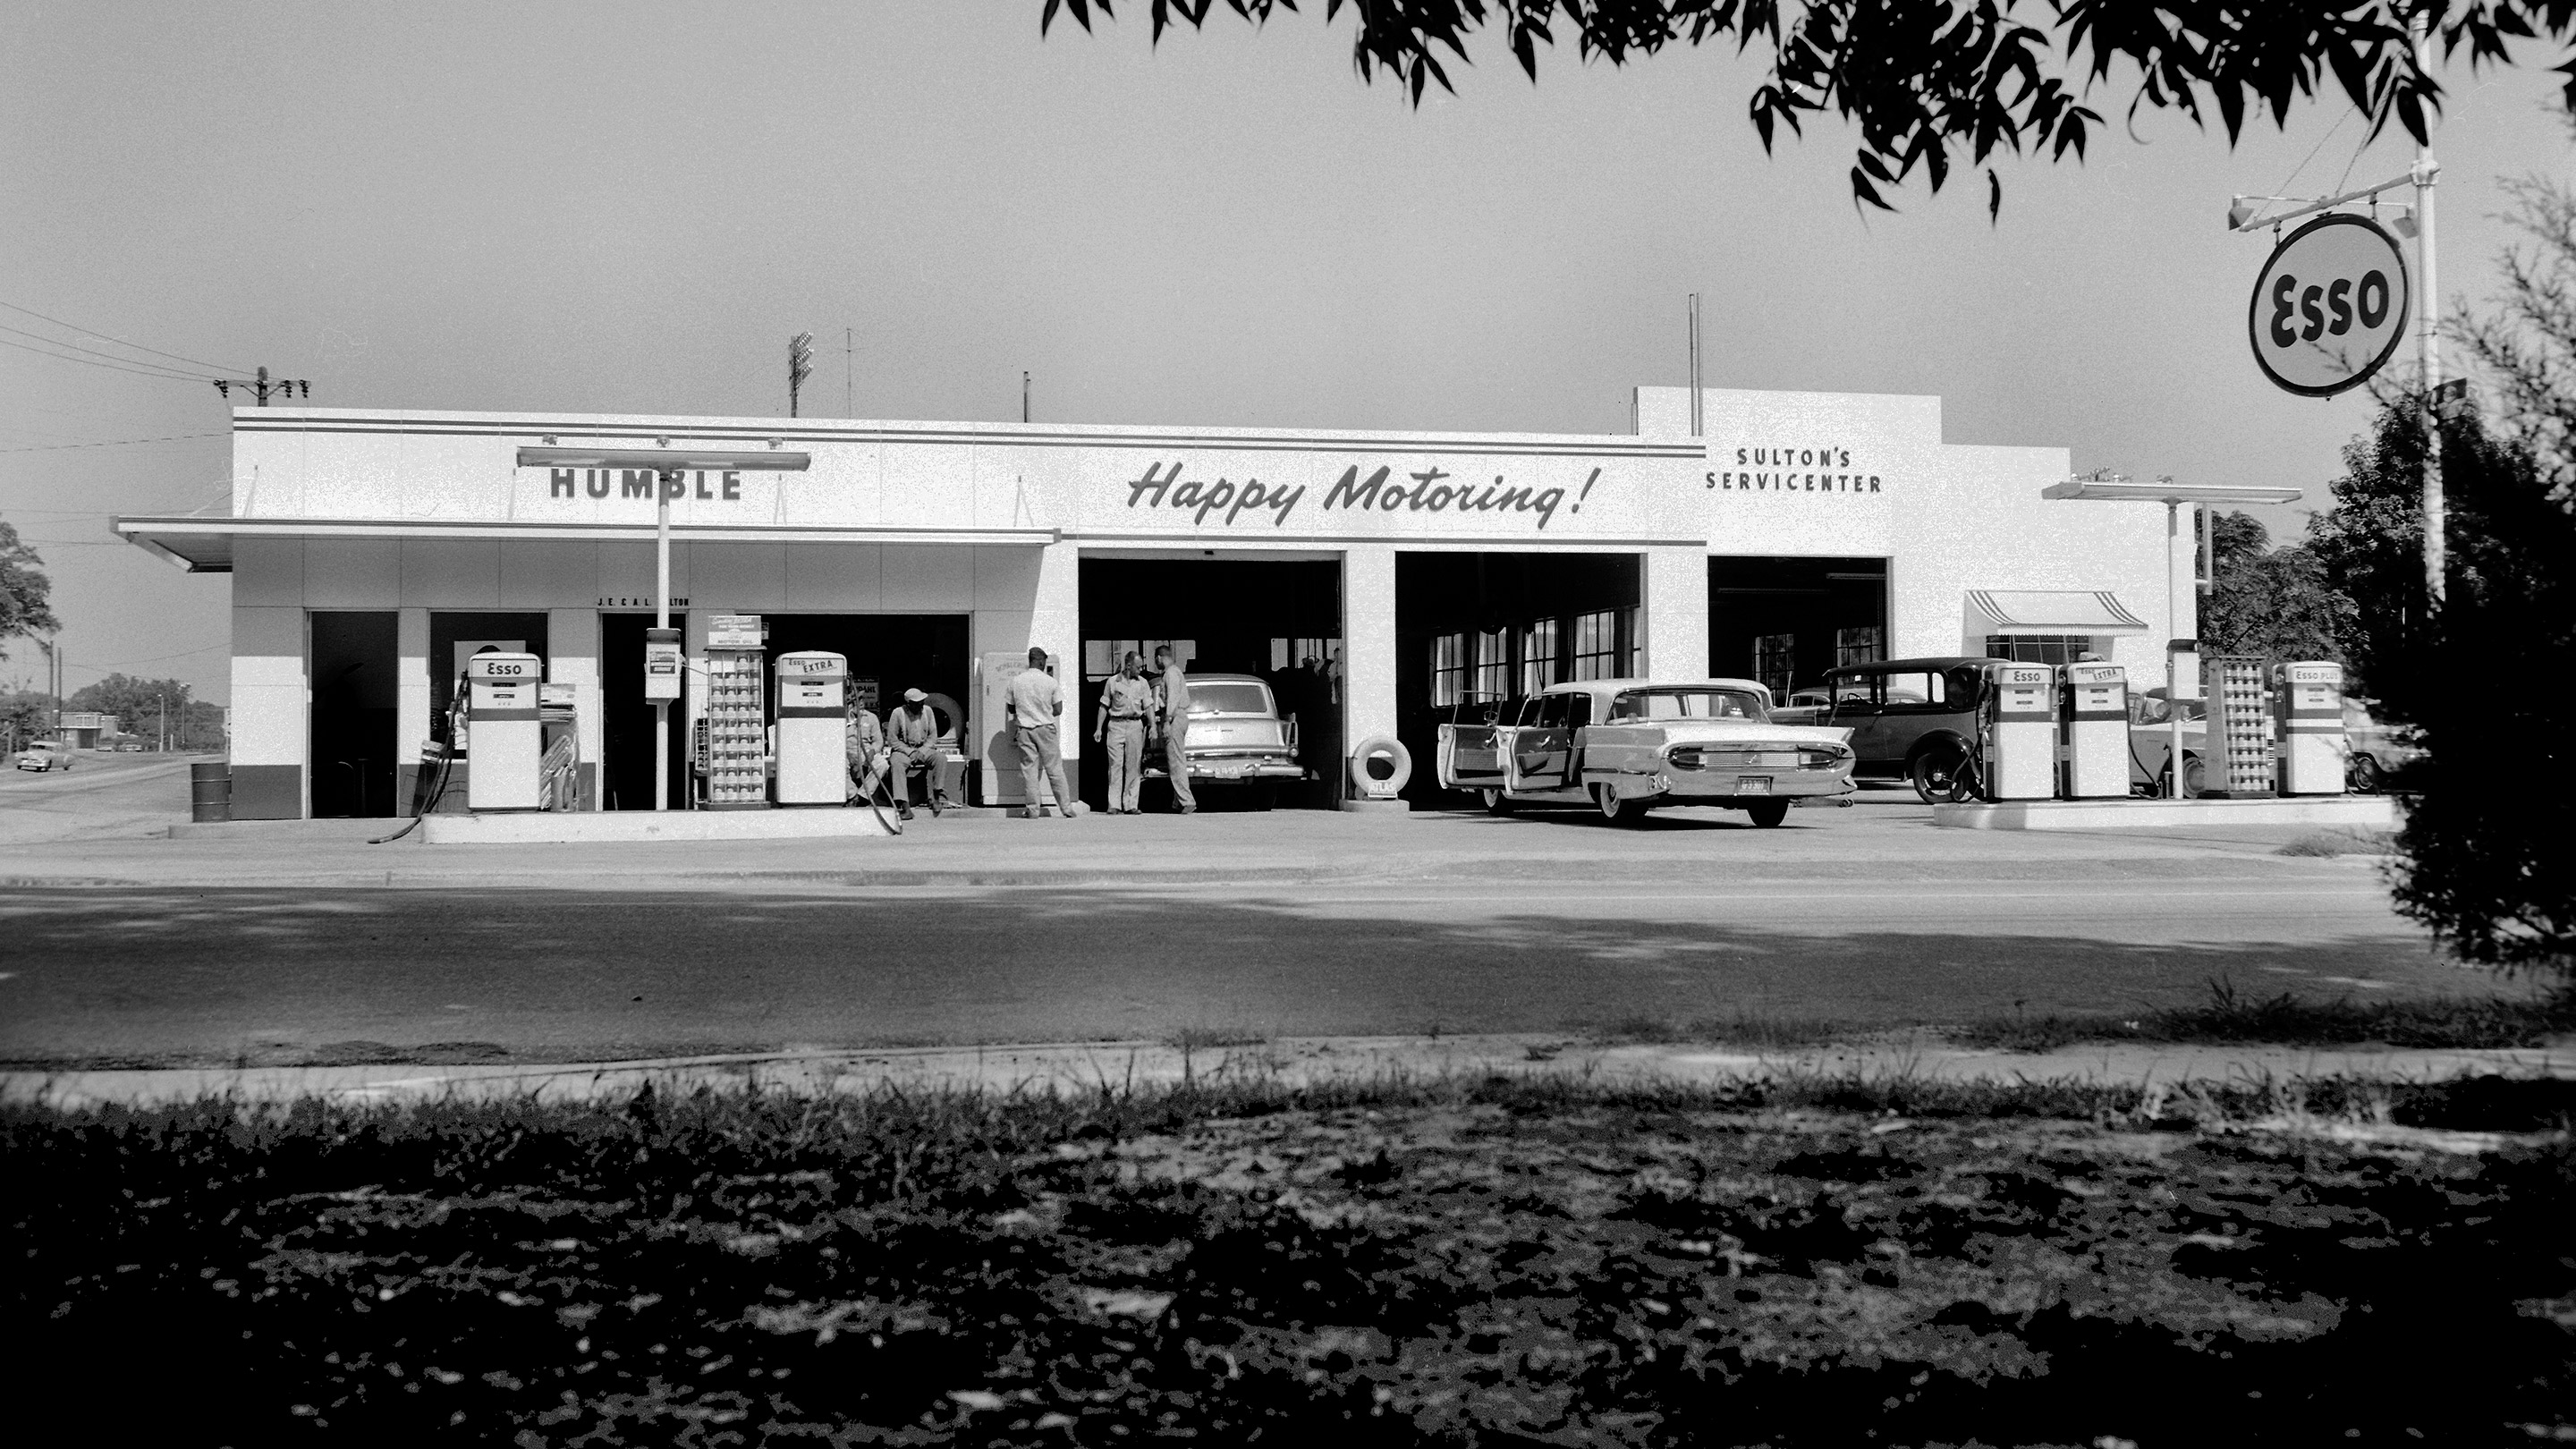 Sulton's Servicecenter and Esso gas station